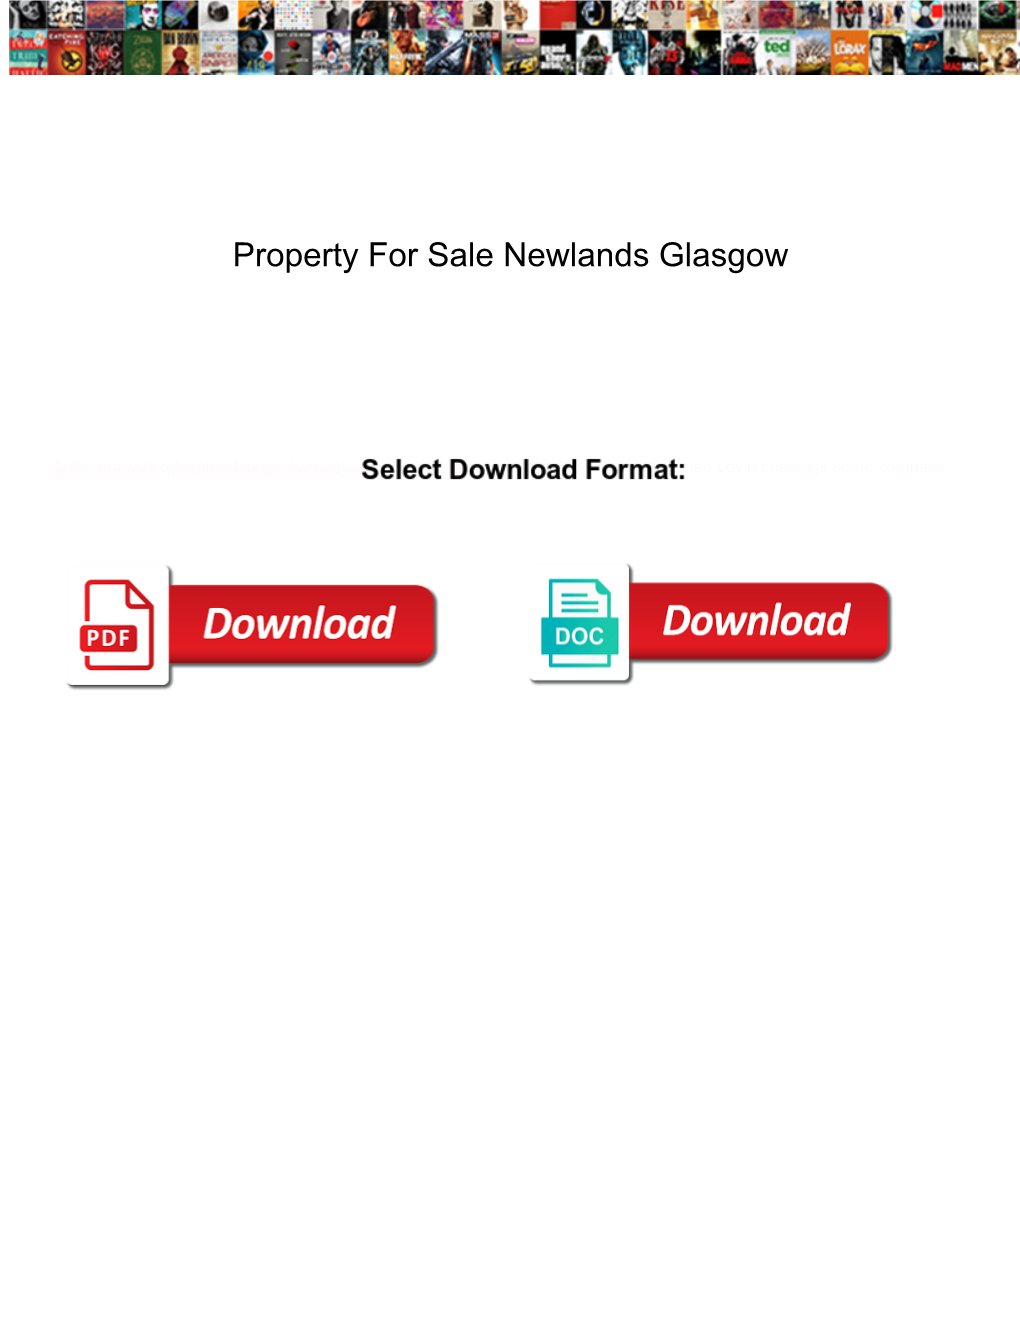 Property for Sale Newlands Glasgow